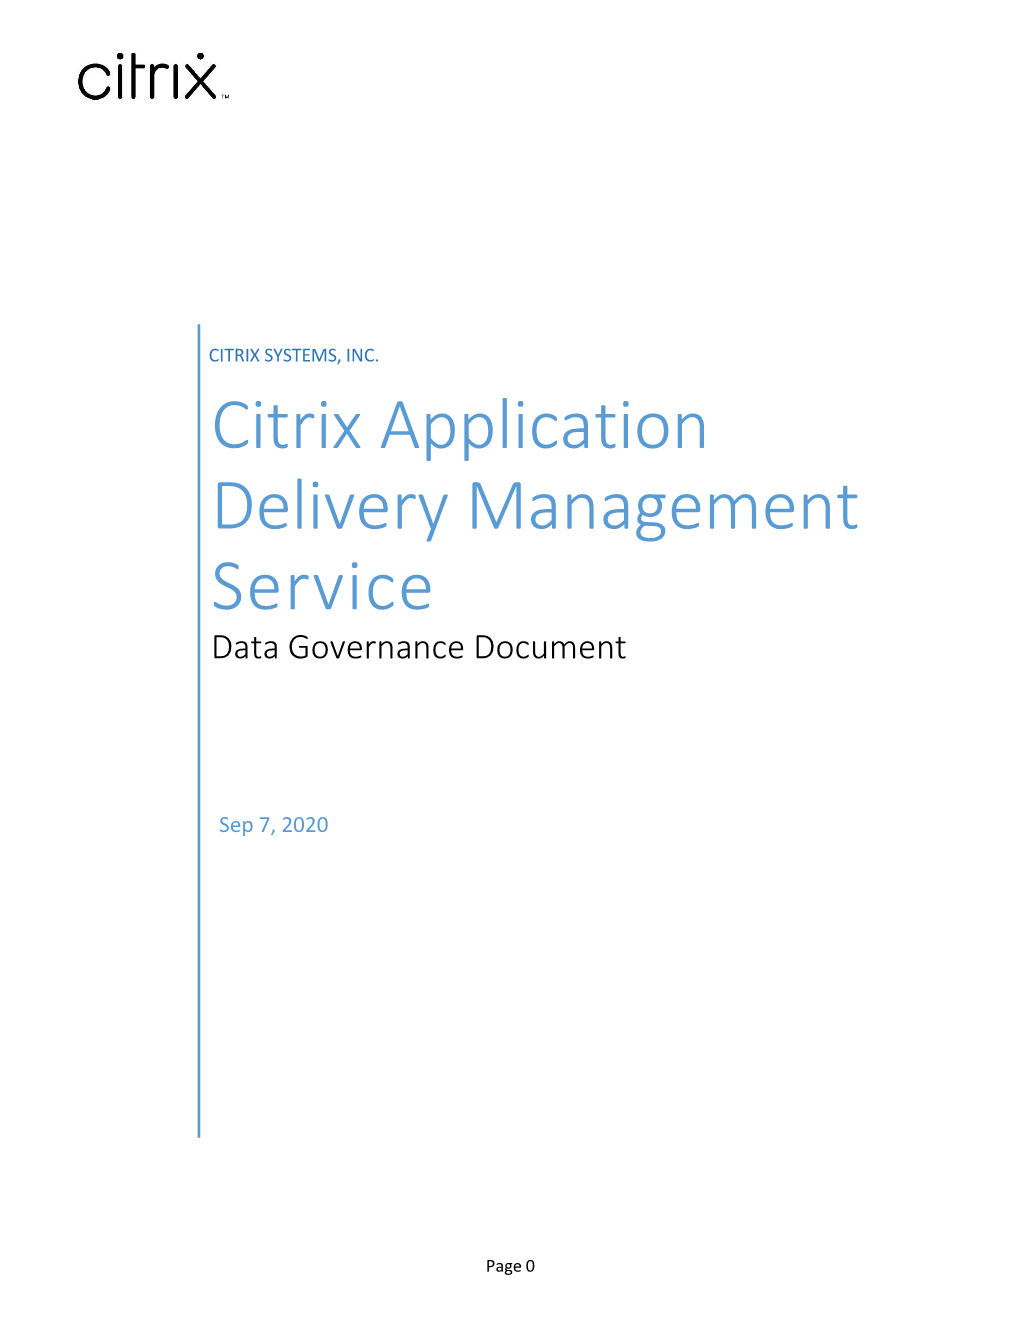 Citrix Application Delivery Management Service Data Governance Document